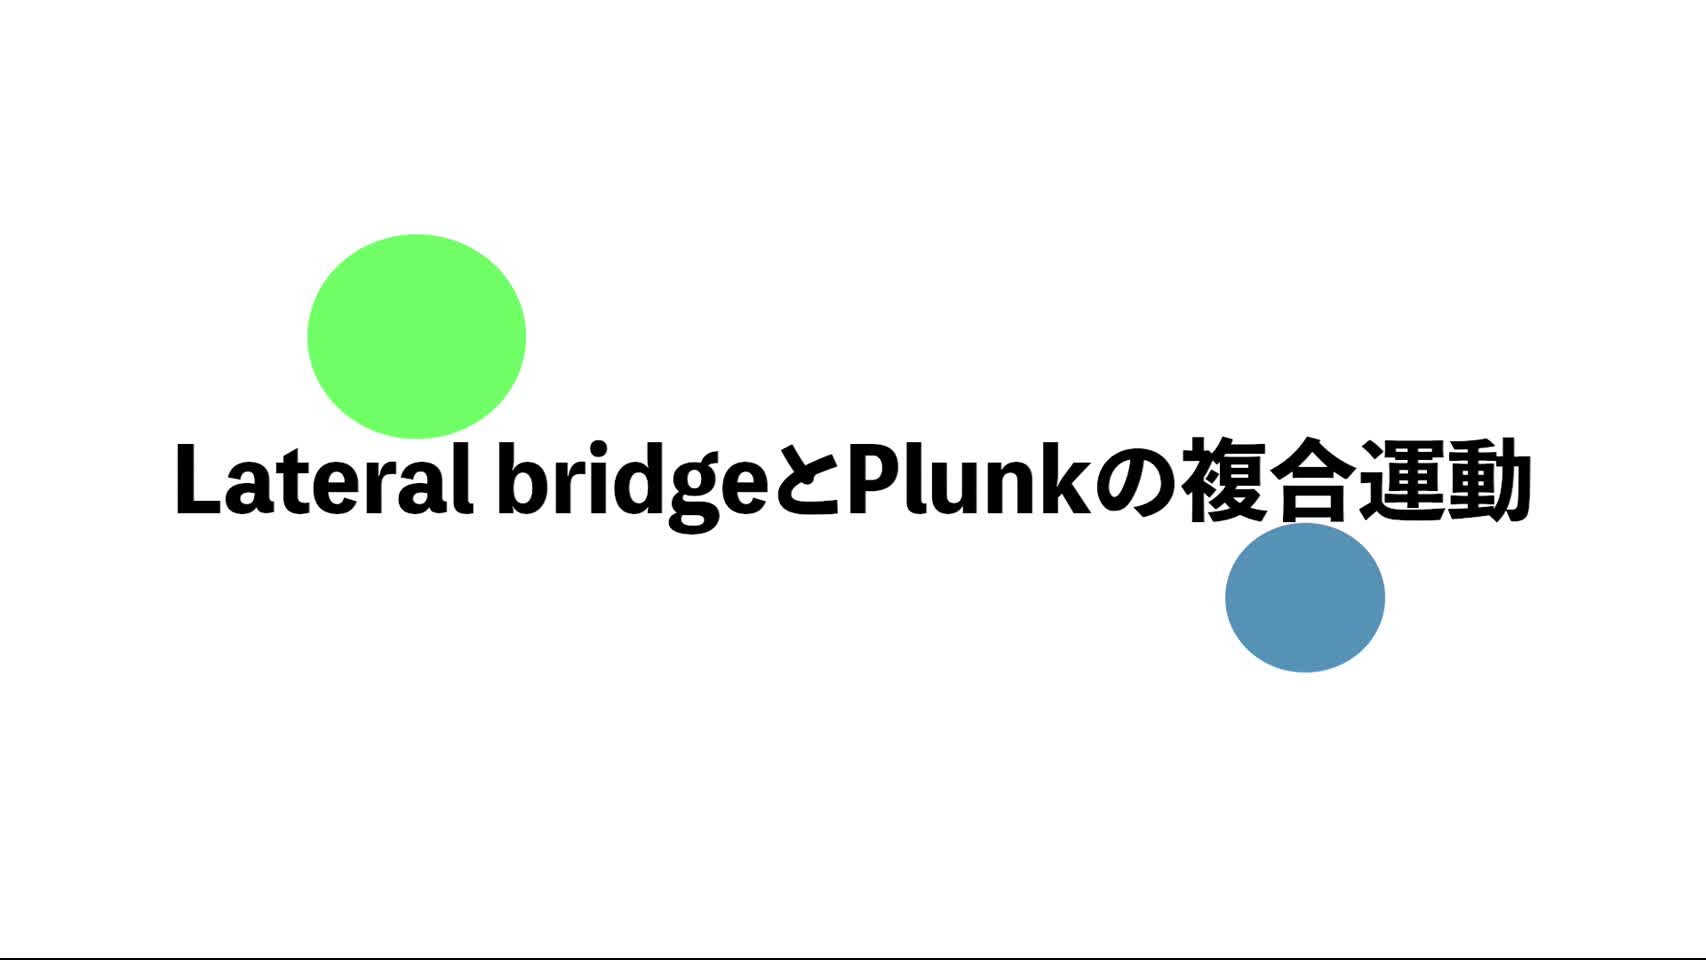 30．Lateral bridge とPlunk の複合運動